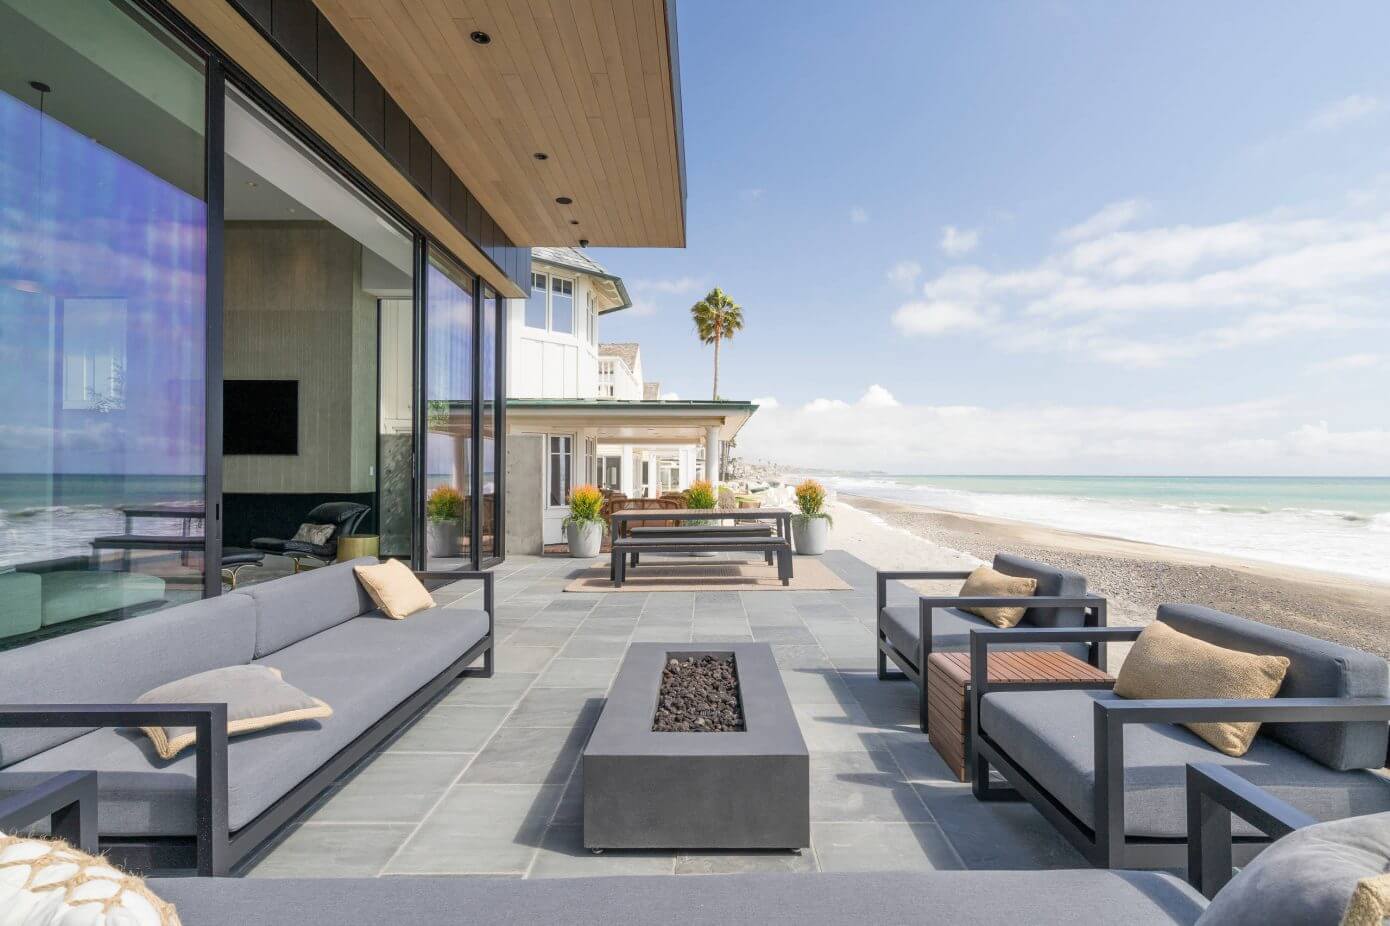 Beach House by Brandon Architects « HomeAdore - 1390 x 926 jpeg 110kB